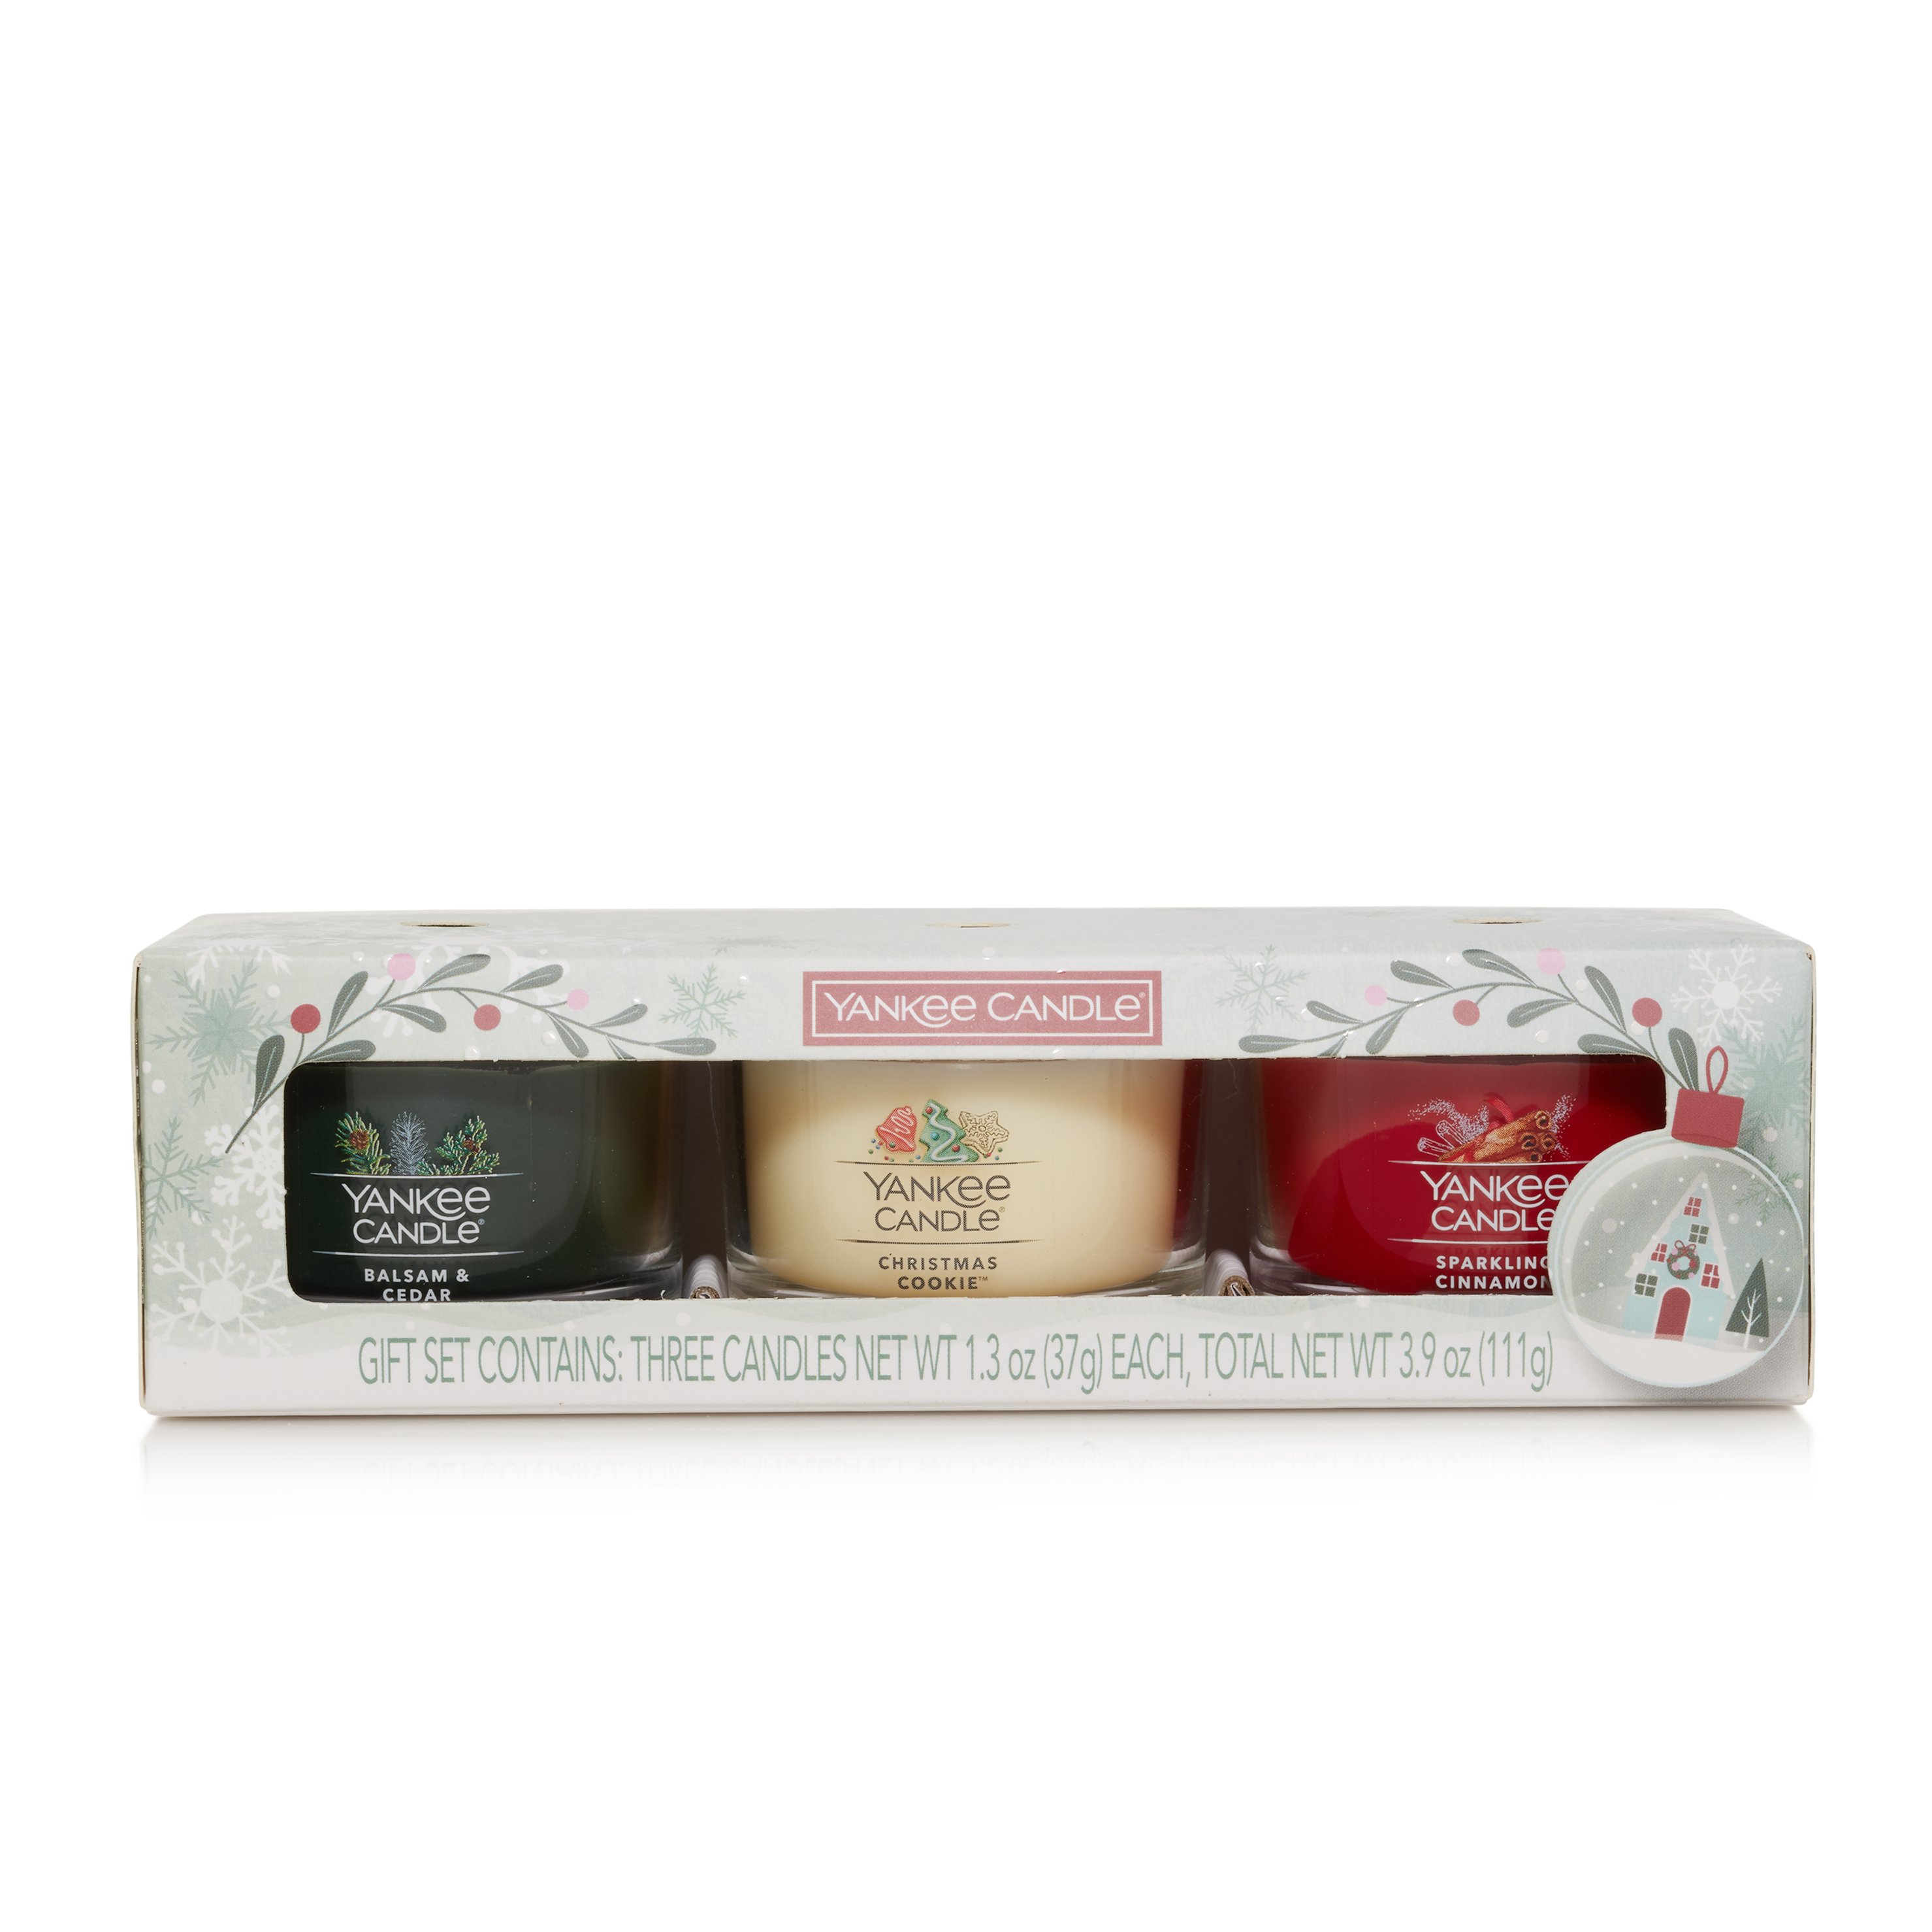 Balsam & Cedar / Christmas Cookie™ / Sparkling Cinnamon Yankee Candle®  Minis - Yankee Candle Minis 3-Packs